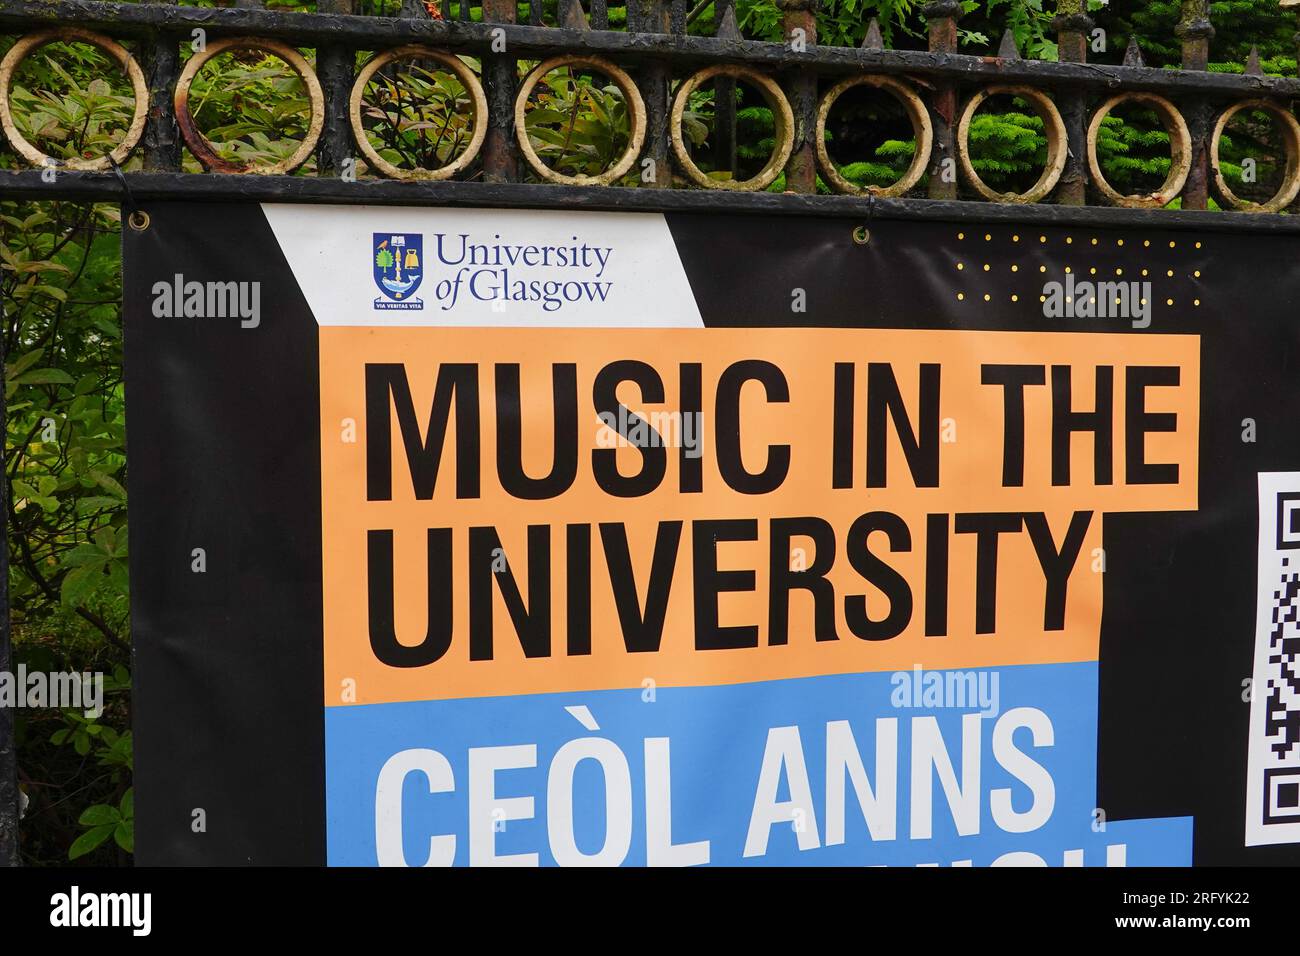 University of Glasgow, Music in the University sign in both English and Scots gaelico, University Avenue, Glasgow, Scotland, UK. Foto Stock